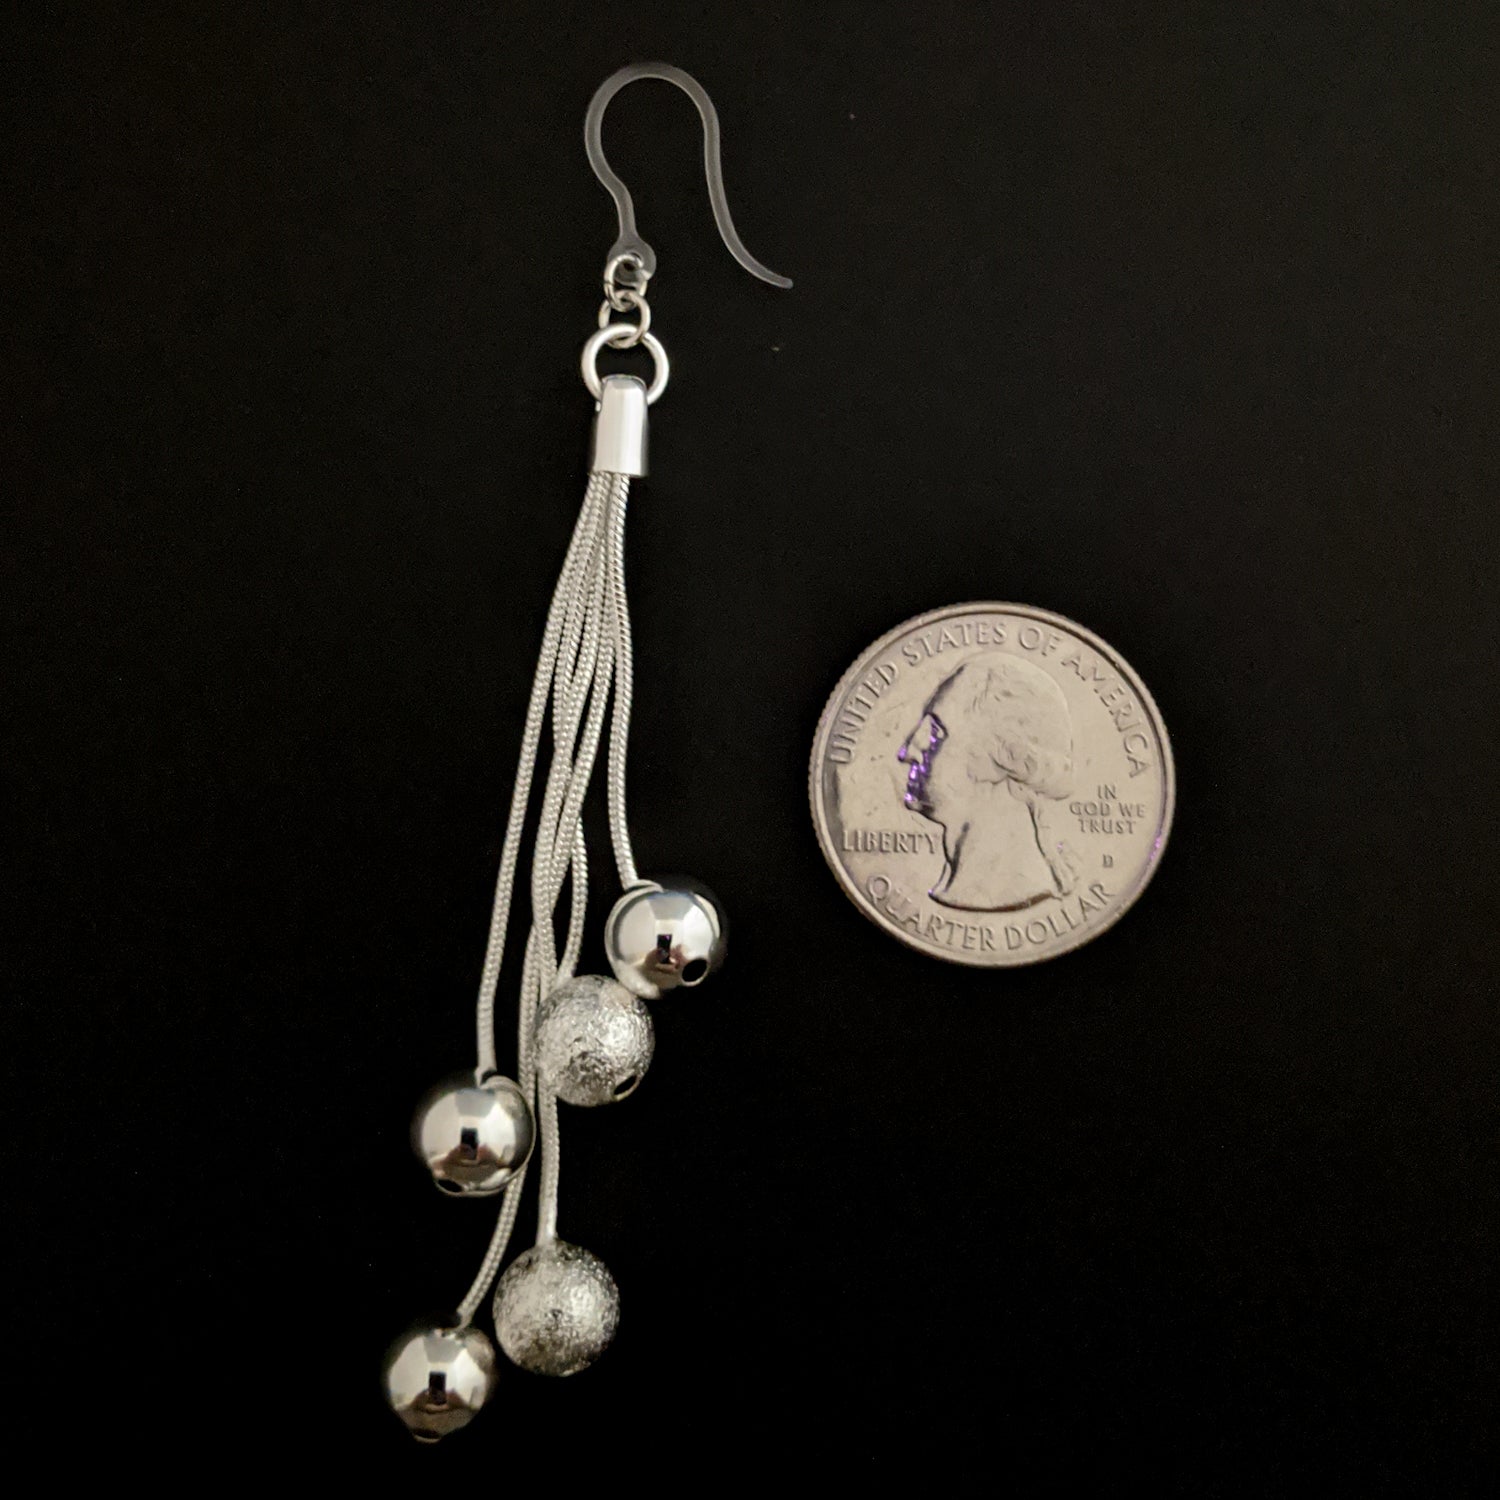 Silver Rope Ball Earrings (Dangles) - size comparison quarter